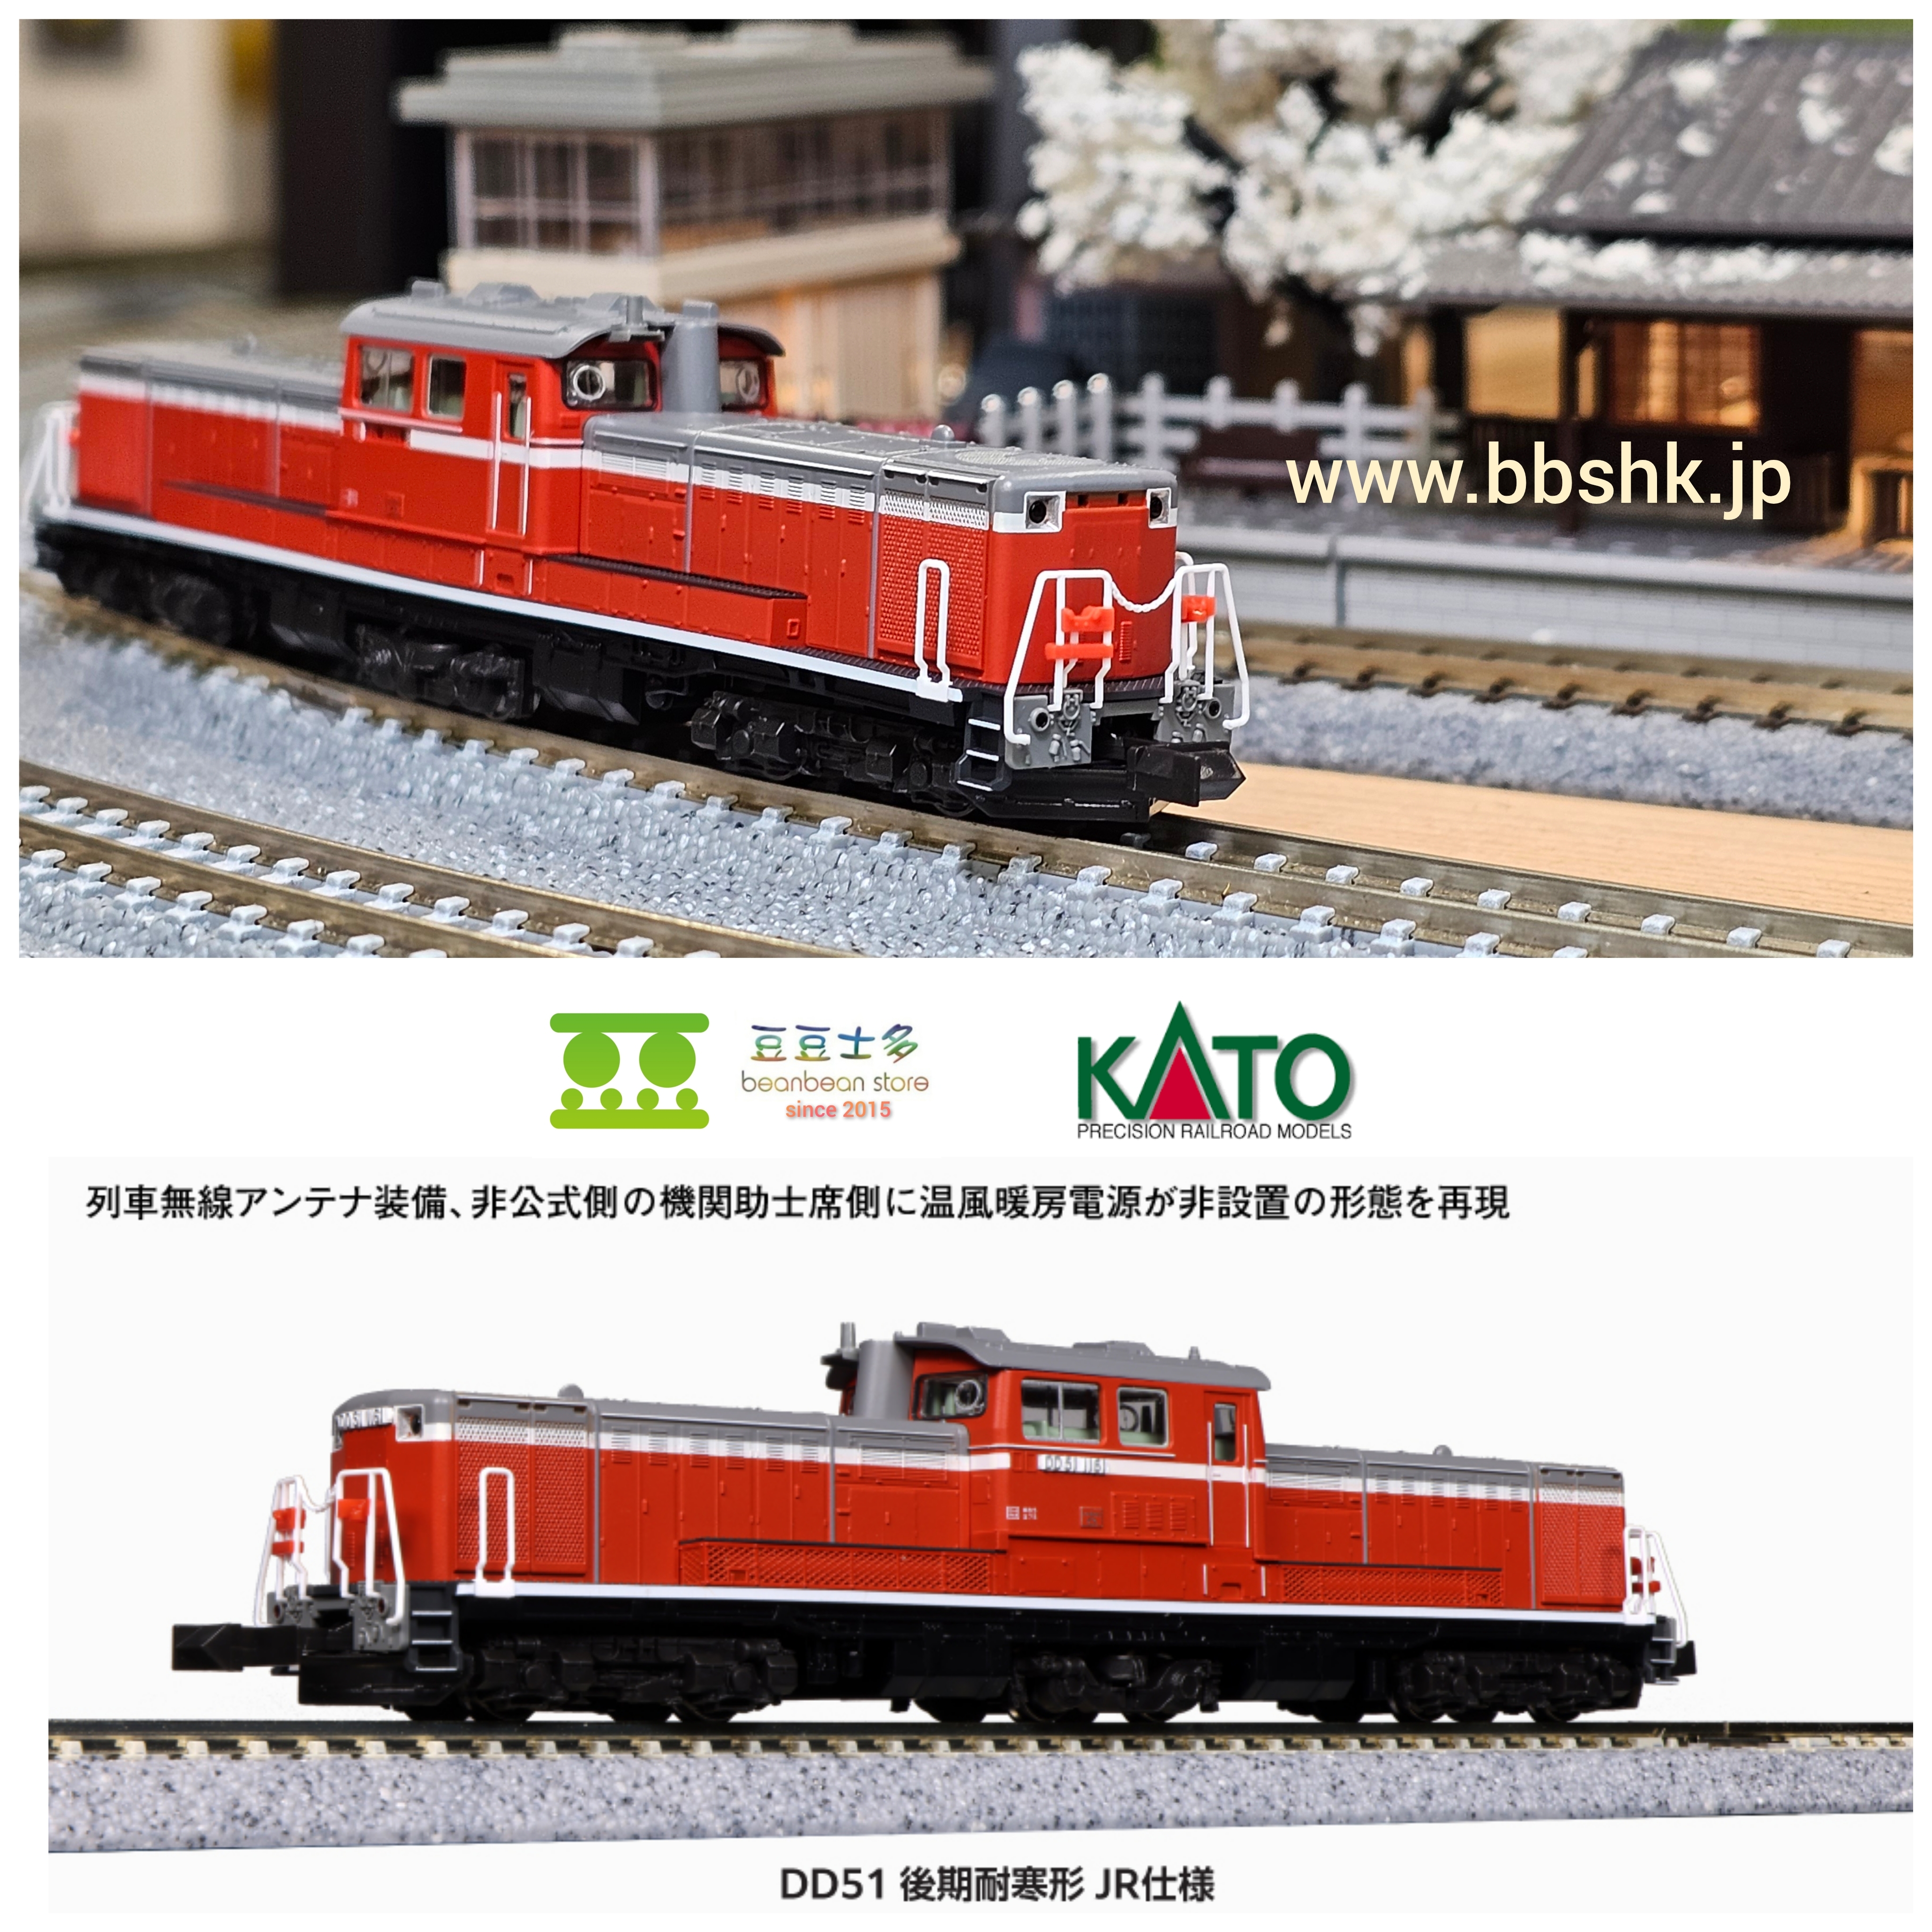 KATO 7008-H DD51 後期 耐寒形 JR 仕様